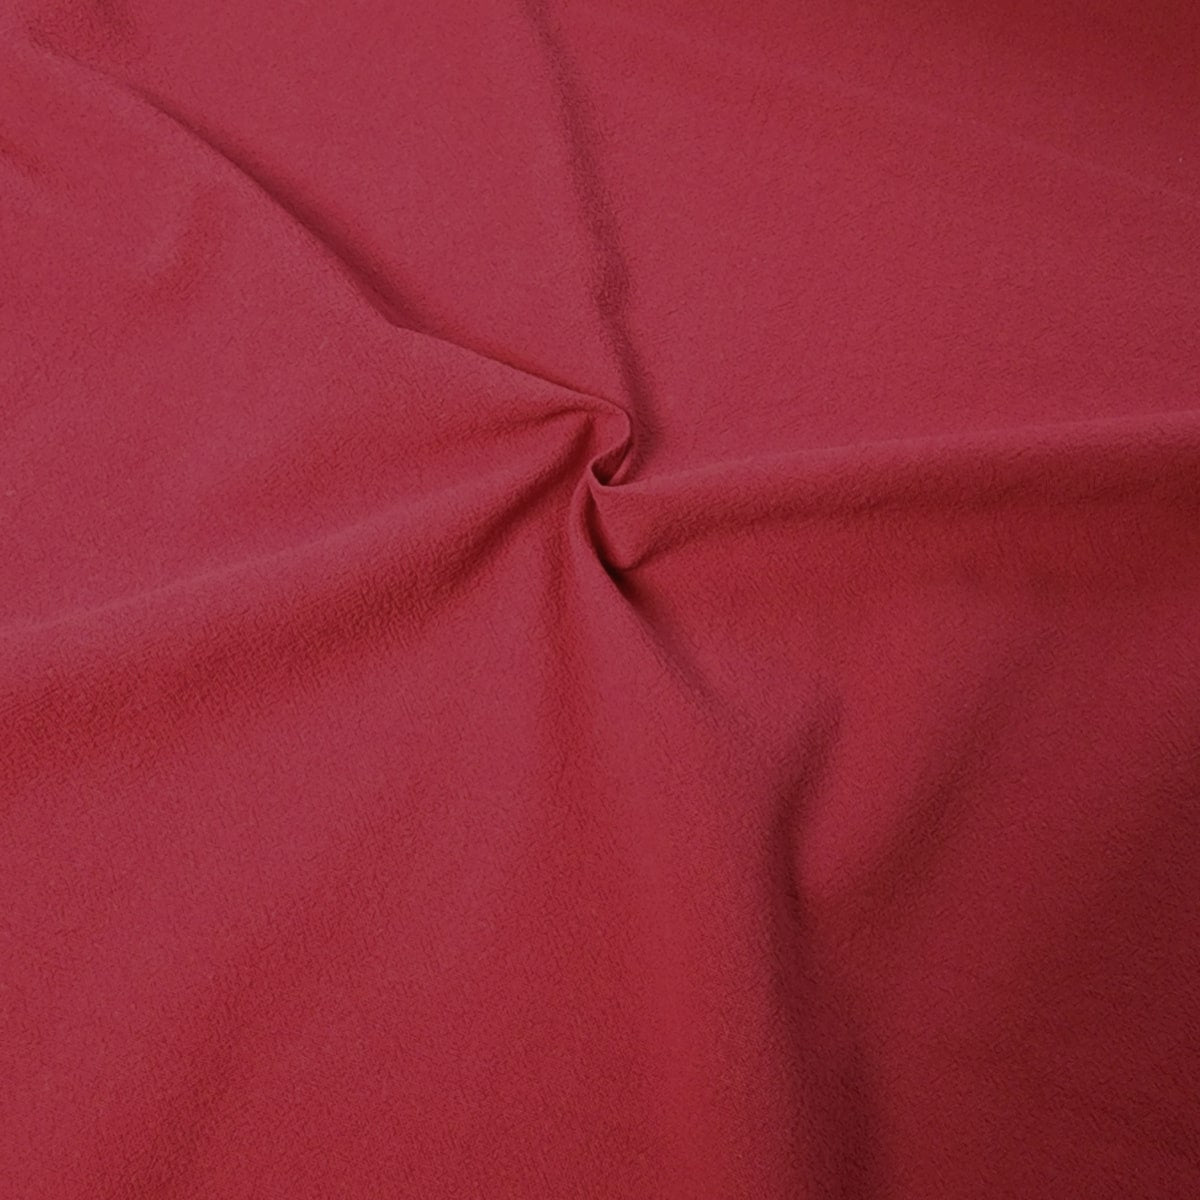 Crumple Cotton Fabric Red